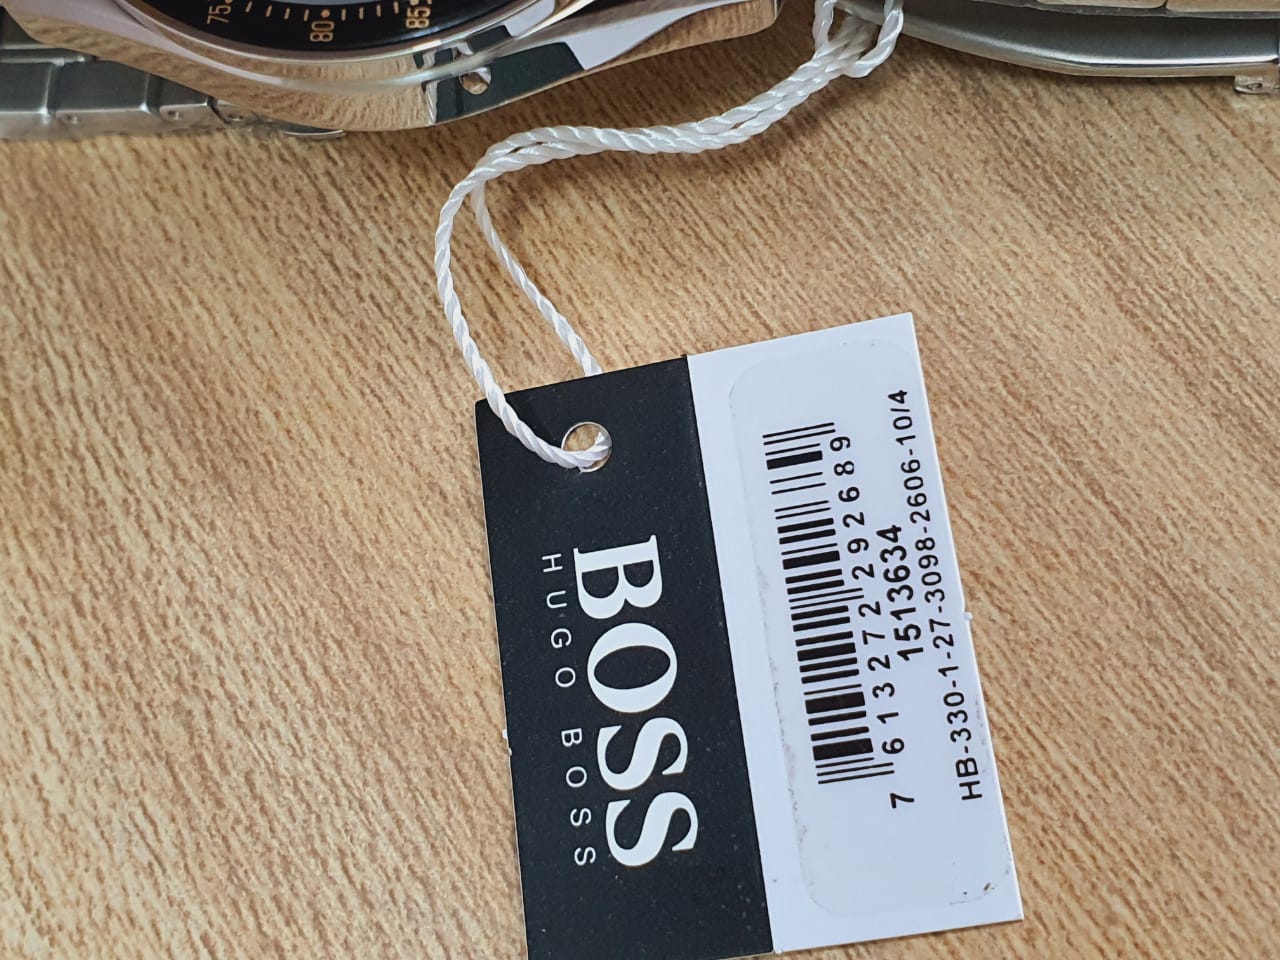 Hugo Boss Men’s Chronograph Quartz Stainless Steel Grey Dial 44mm Watch 1513634